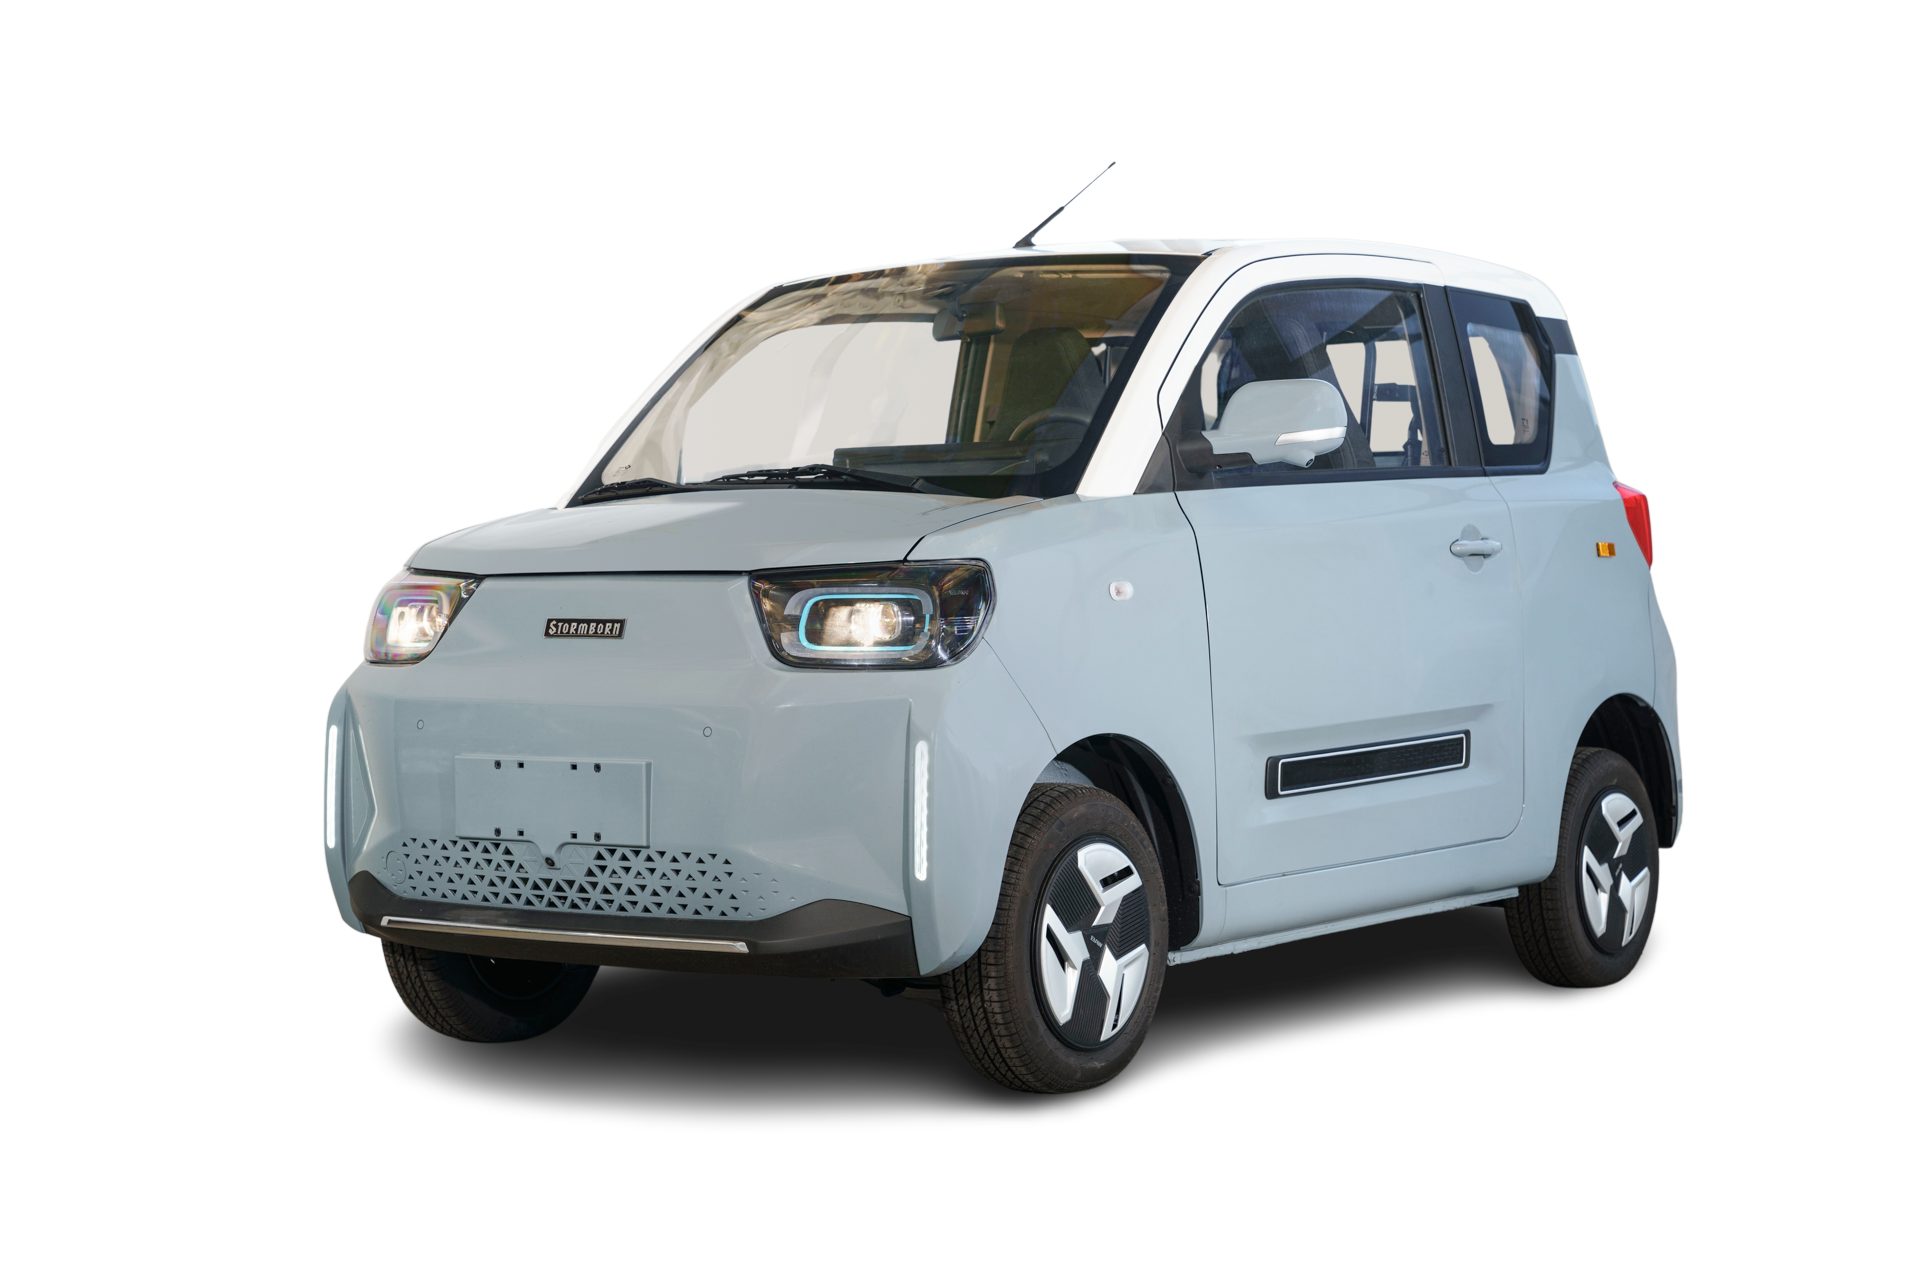 STORMBORN Elektromobil City-Pony, 13000,00 W, 90,00 km/h, Fahrerairbag, maximale Zuladung 440 kg, ABS & EBO System, Klimaanlage